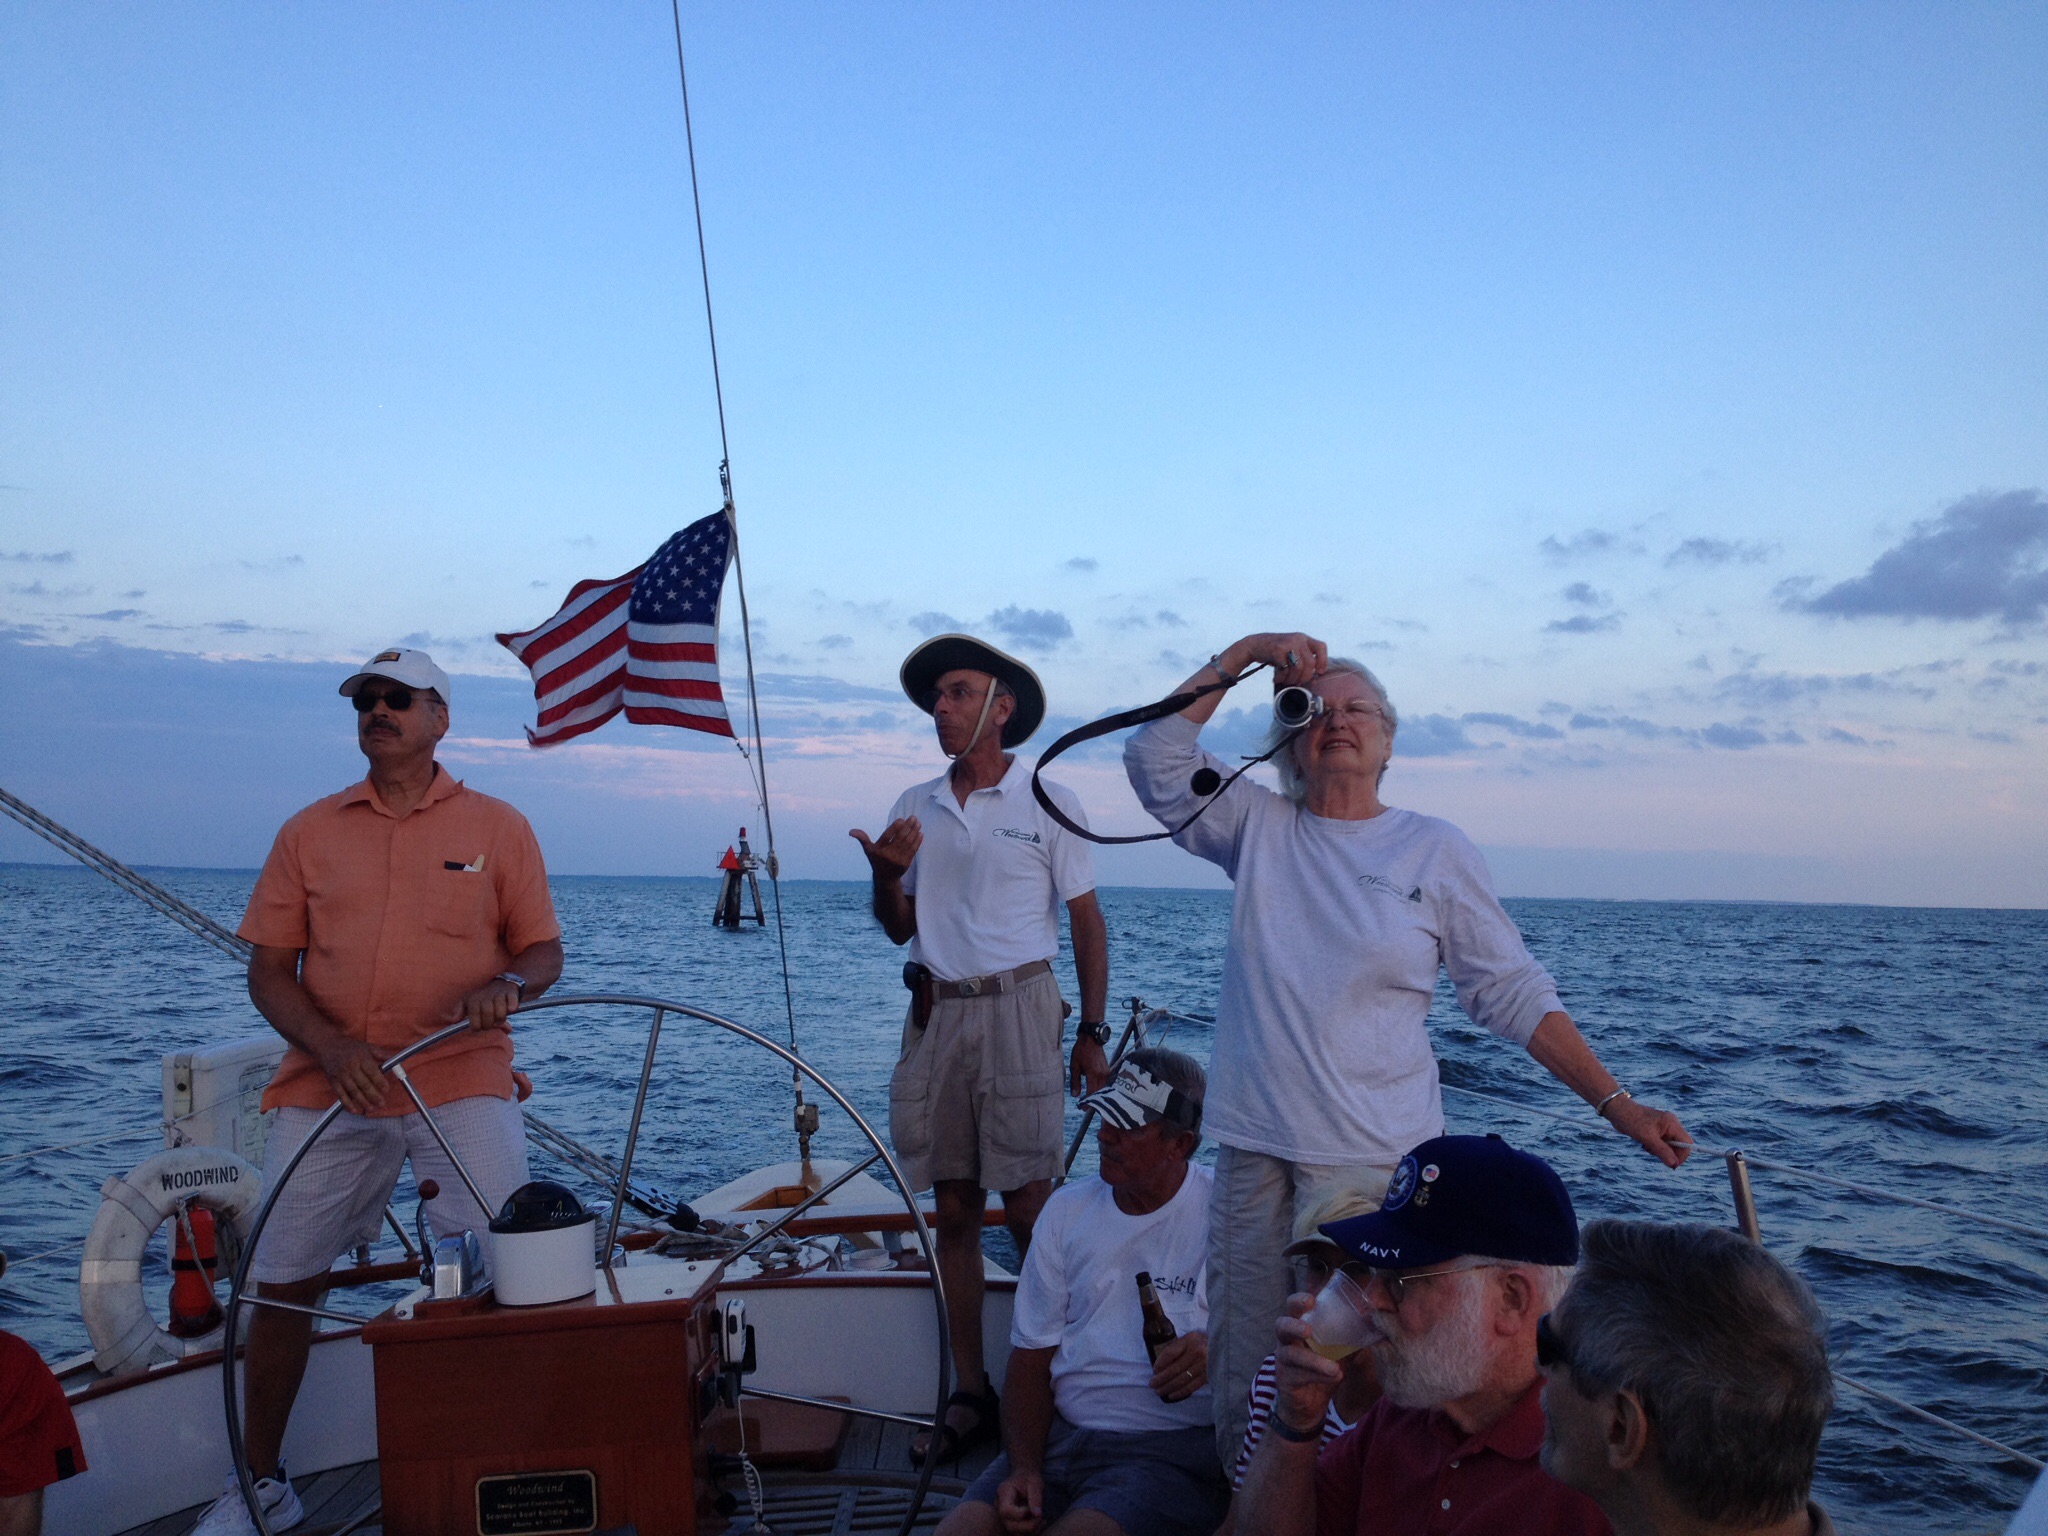 Guests steering the schooner with Captain looking on